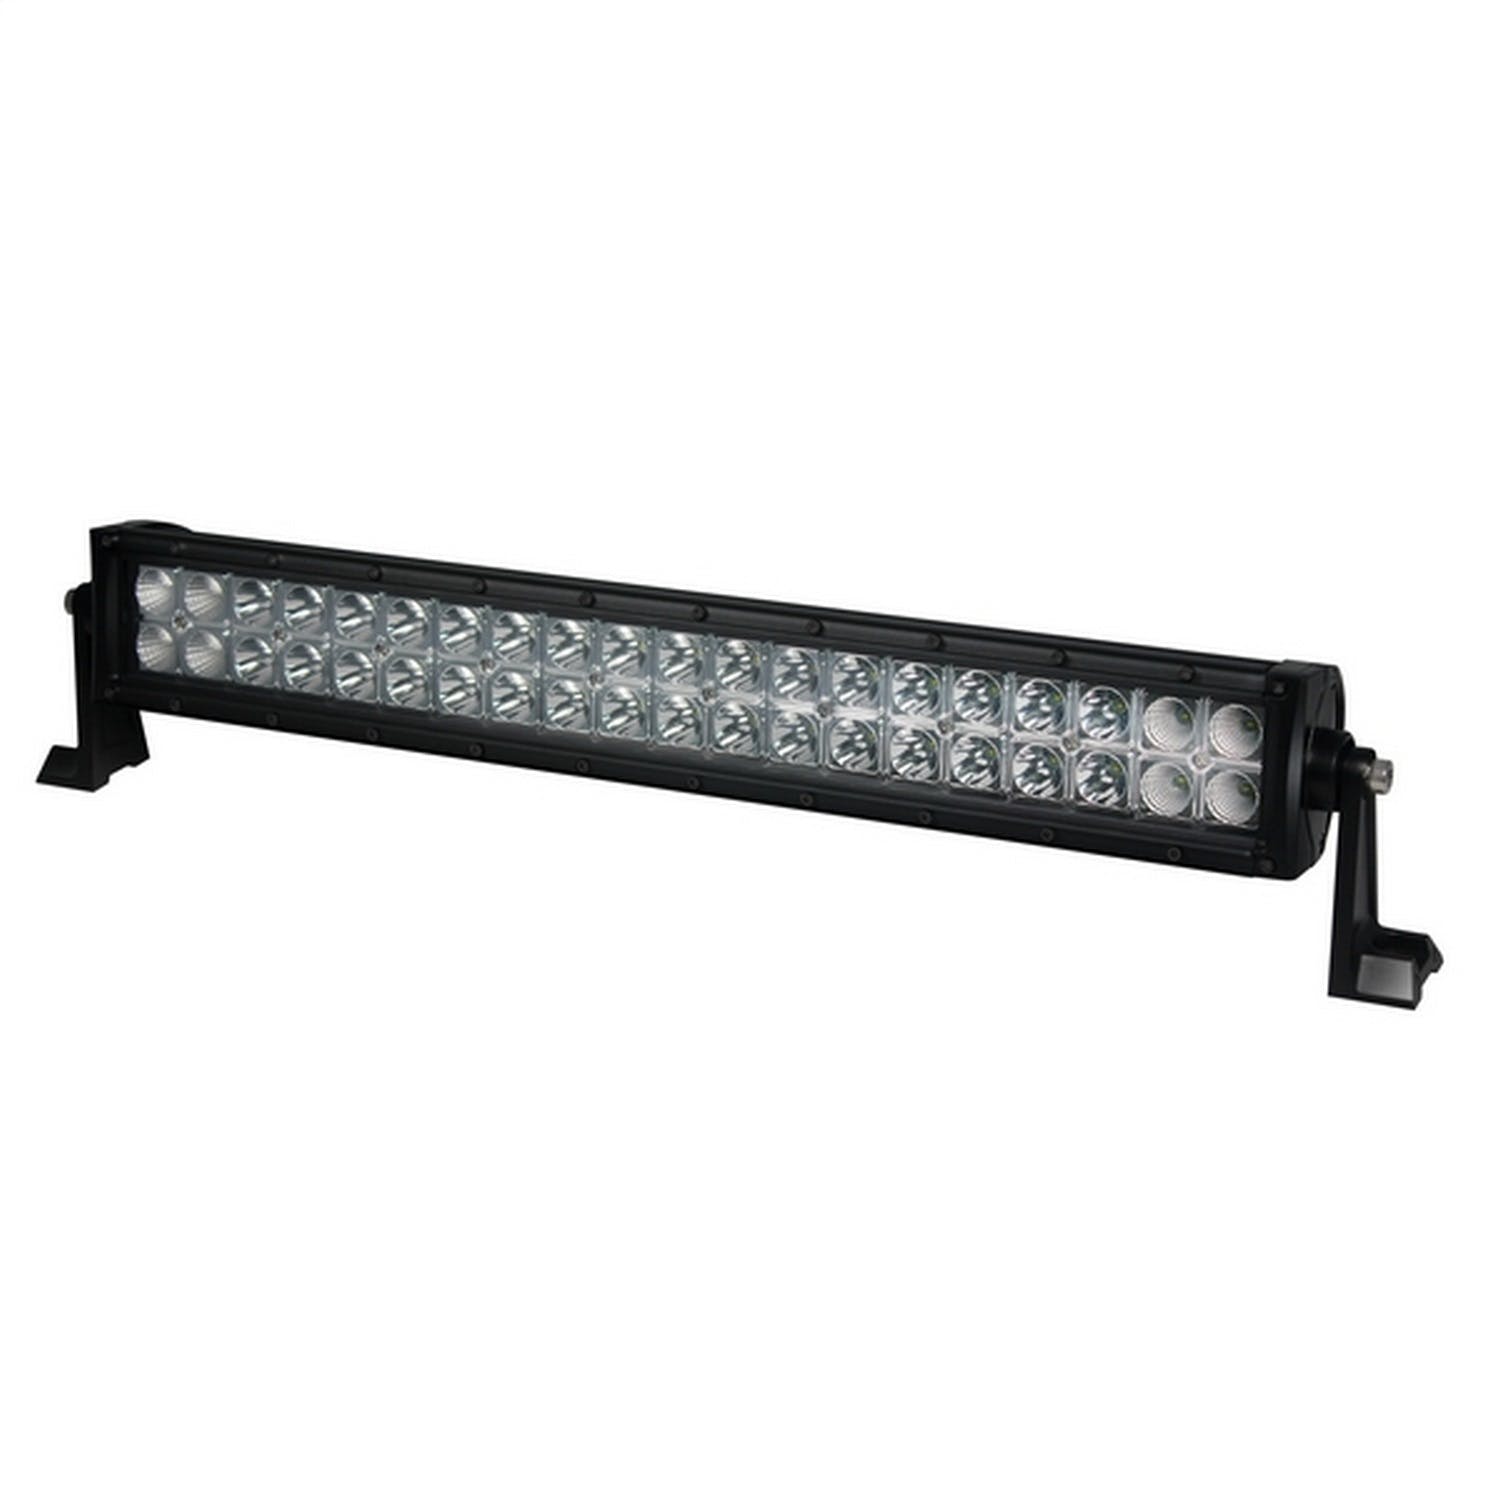 BrightSource 72020 Off-Road LED Light Bar